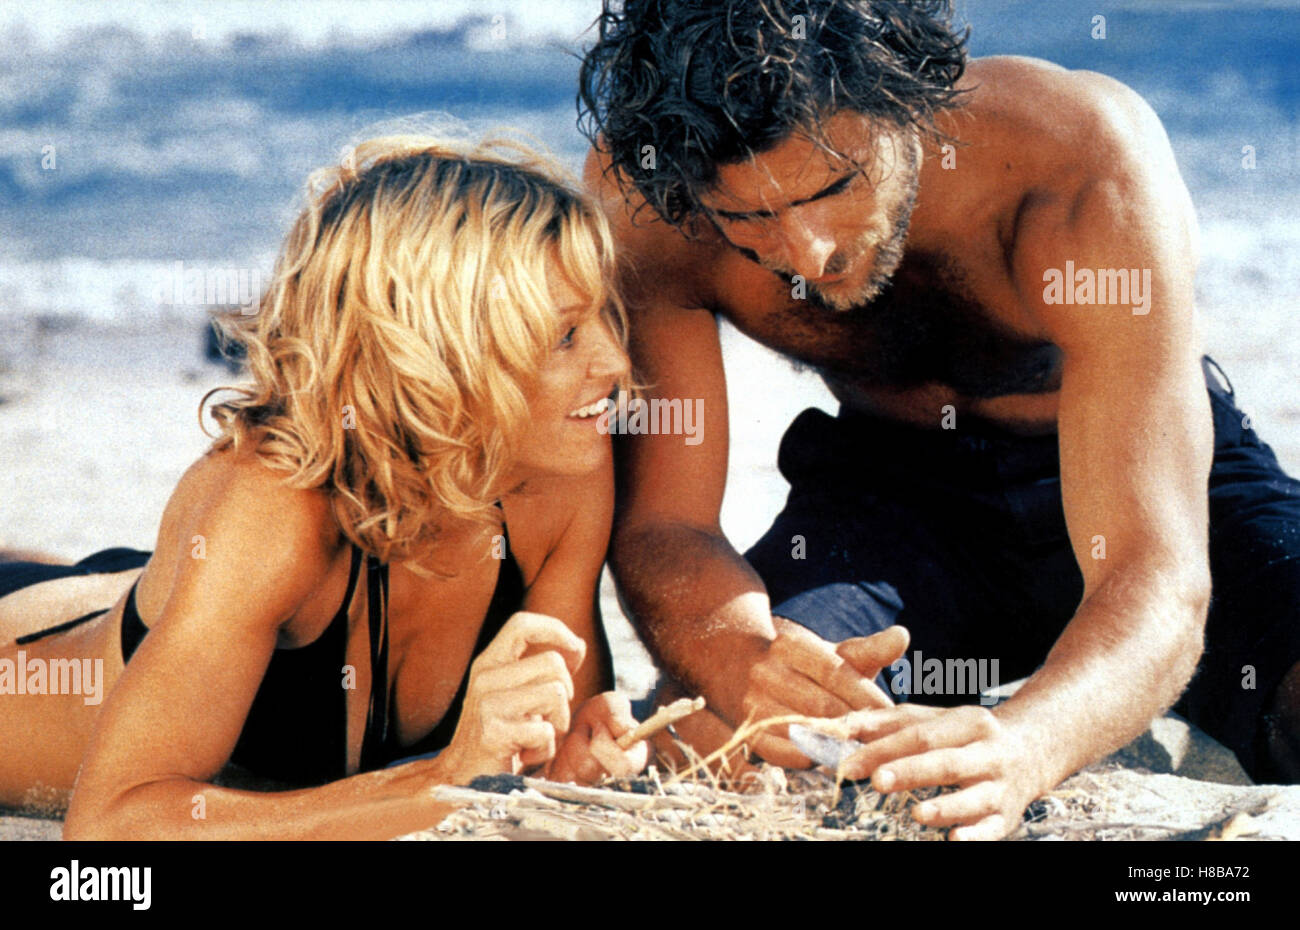 Stürmische Liebe, (Swept Away) GB-IT 2002, Regie: Guy Ritchie Madonna, Adriano Giannini, Chiave: Paar am Strand Foto Stock